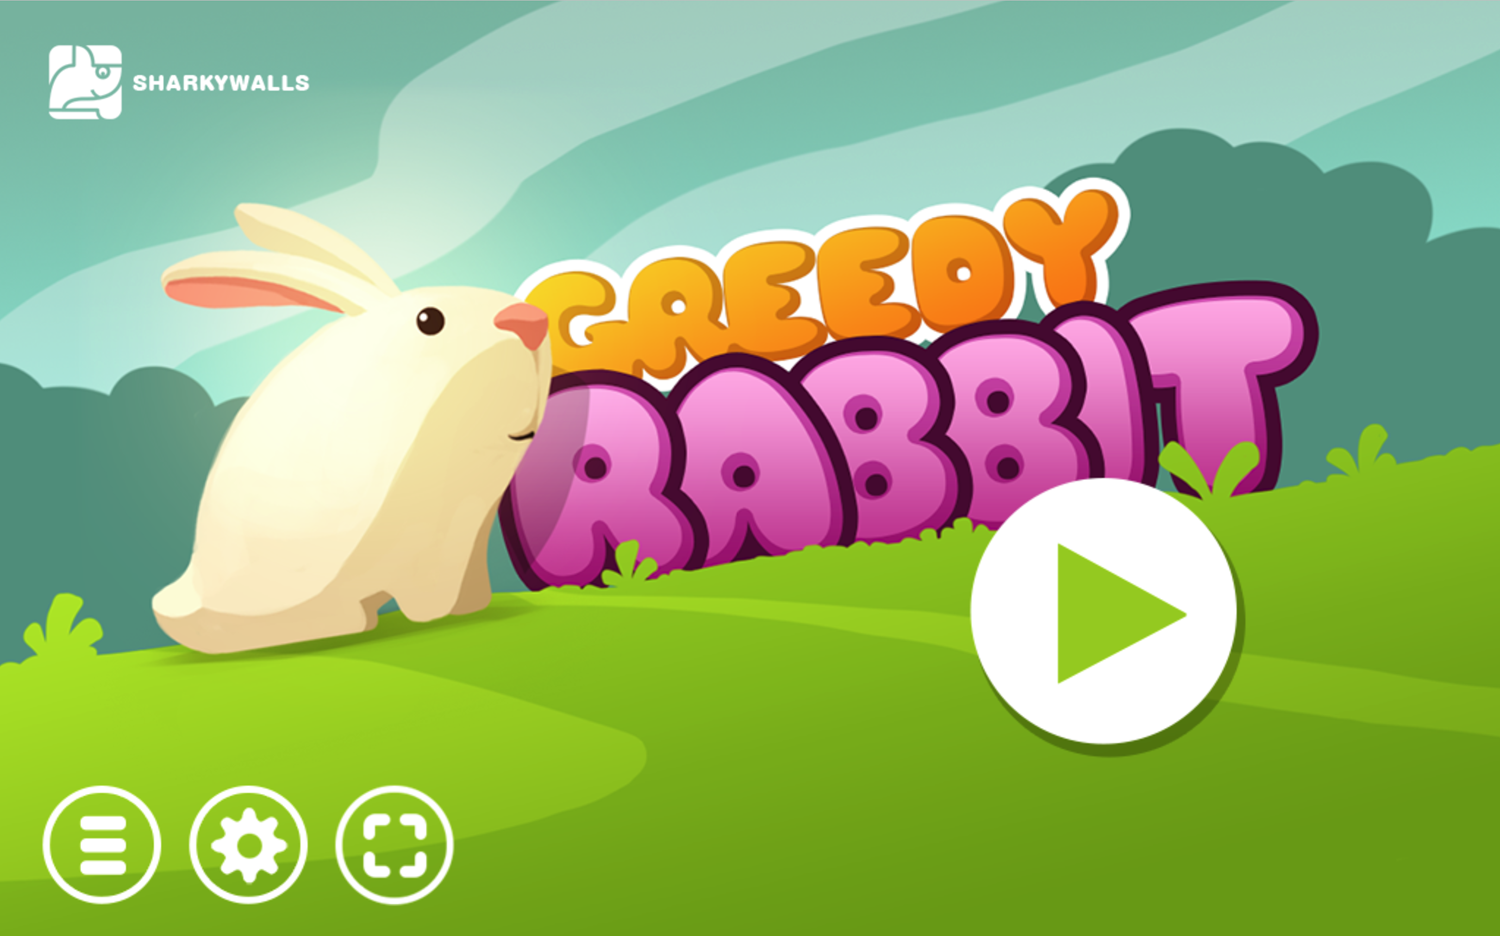 Greedy Rabbit Game Welcome Screen Screenshot.